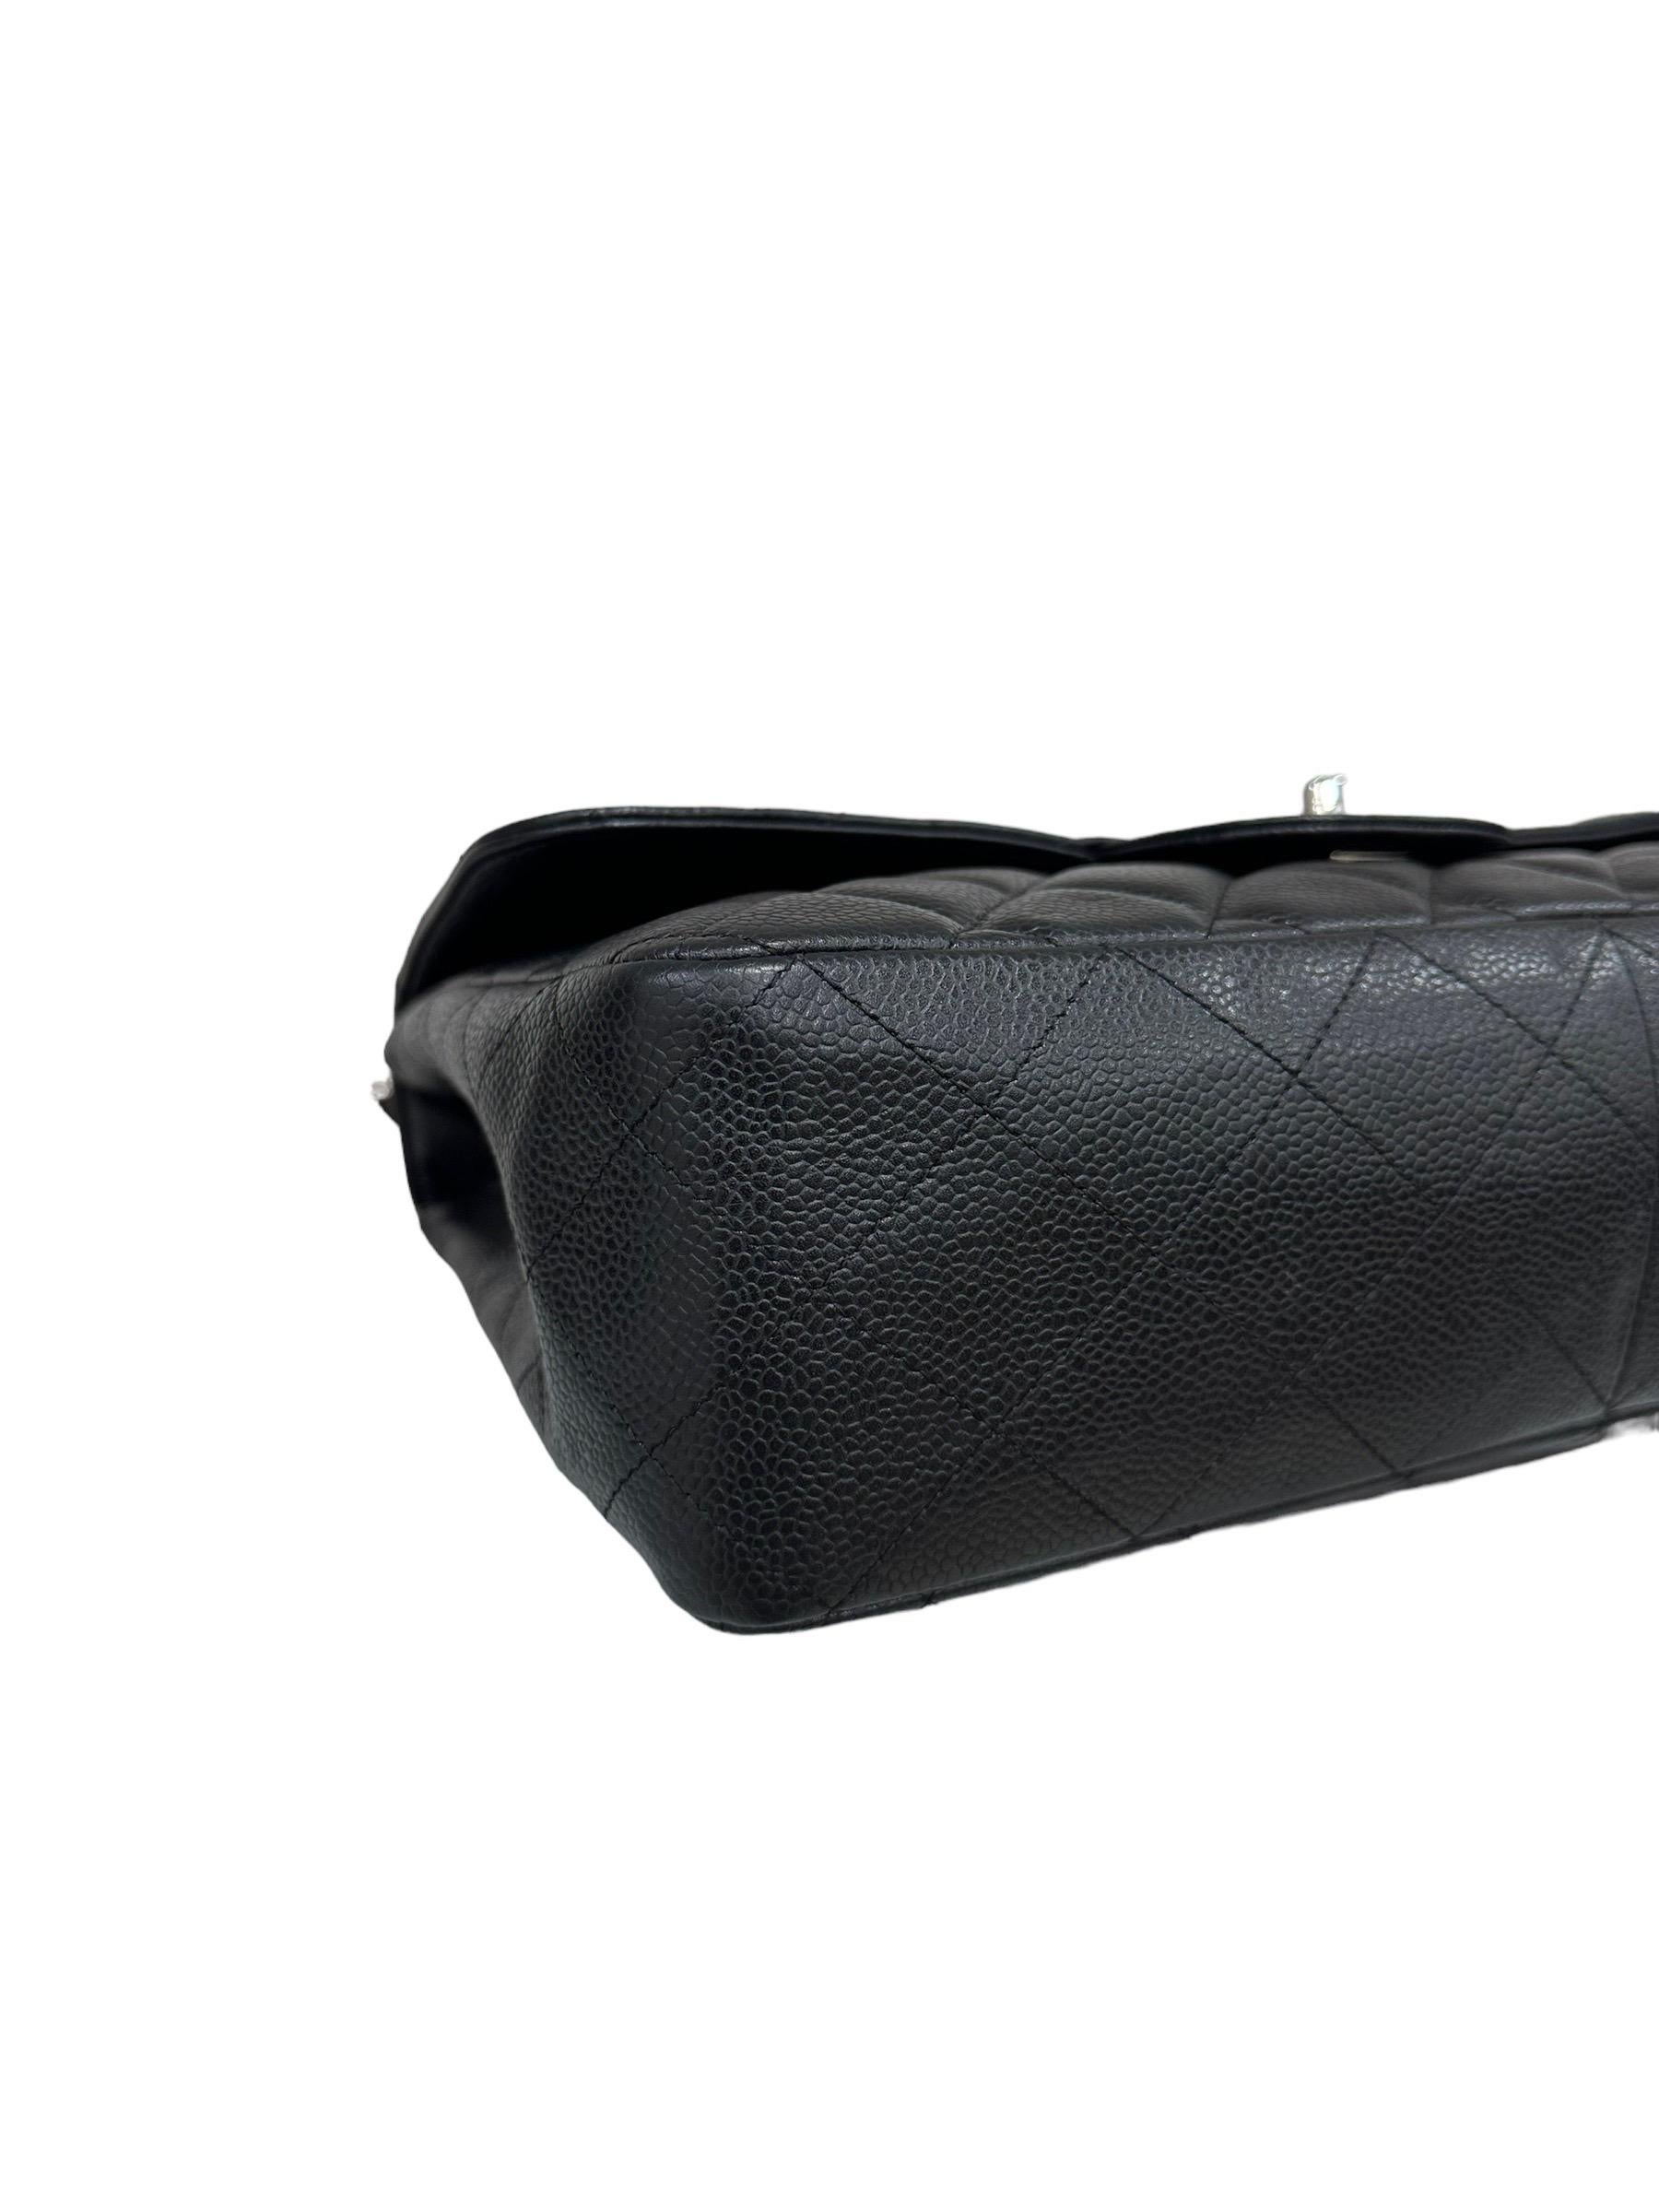 2009 Chanel Jumbo Black Caviar Leather Top Shoulder Bag  For Sale 8